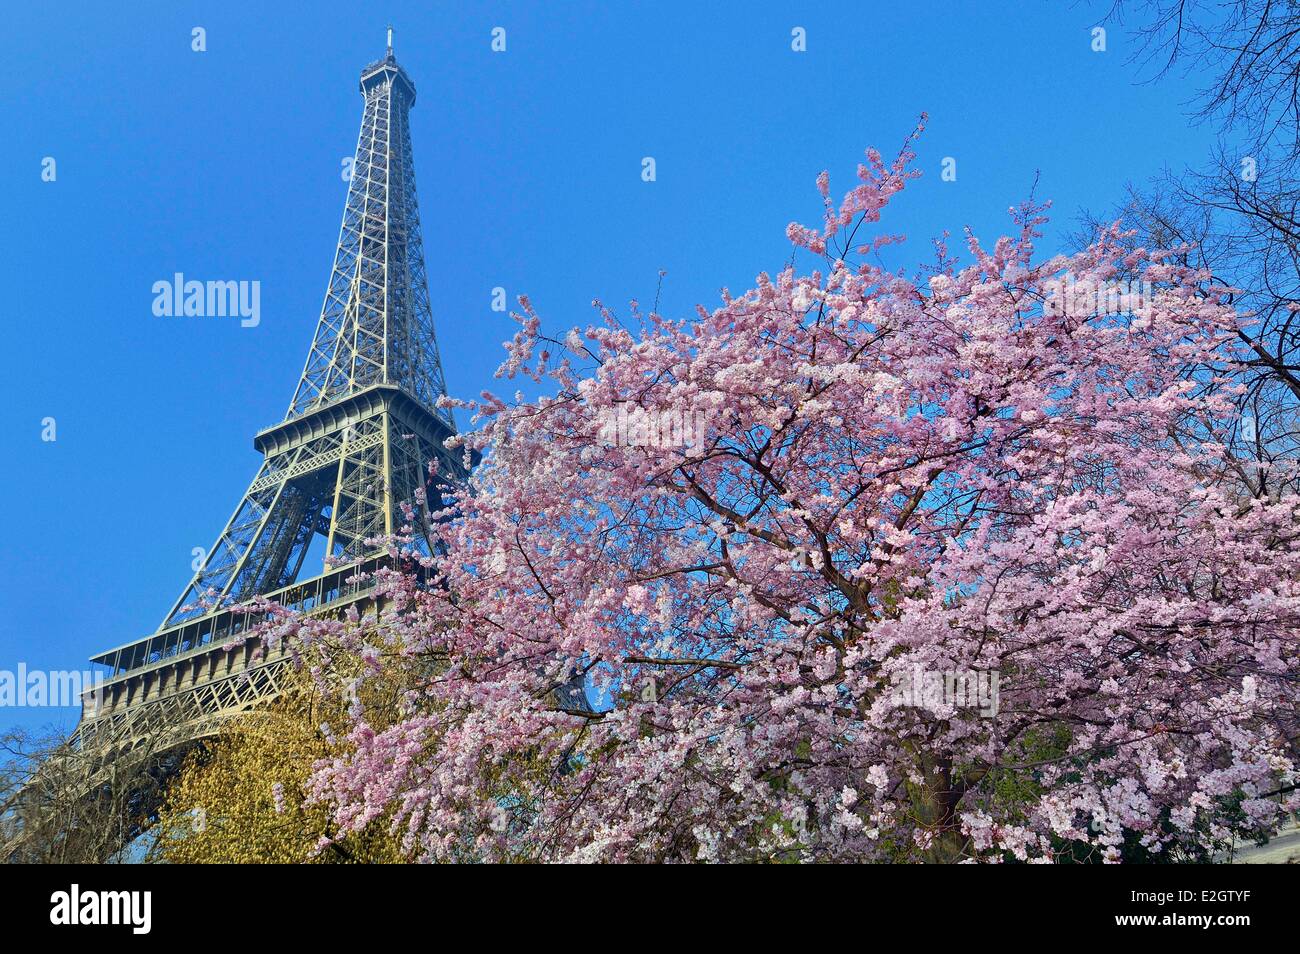 Francia Parigi torre Eiffel e Prunus sp. in fiore Foto Stock